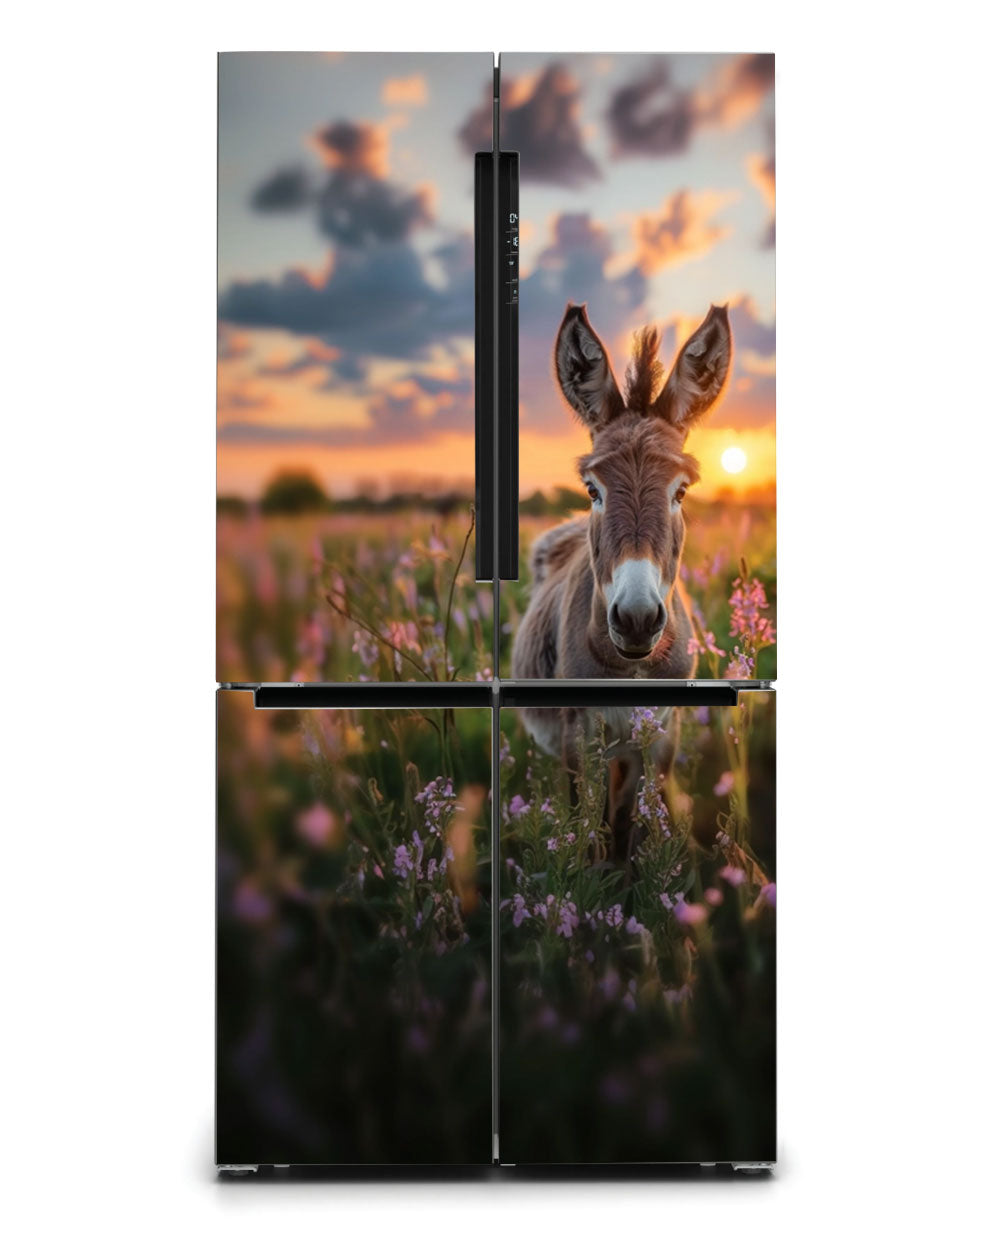 A charming donkey